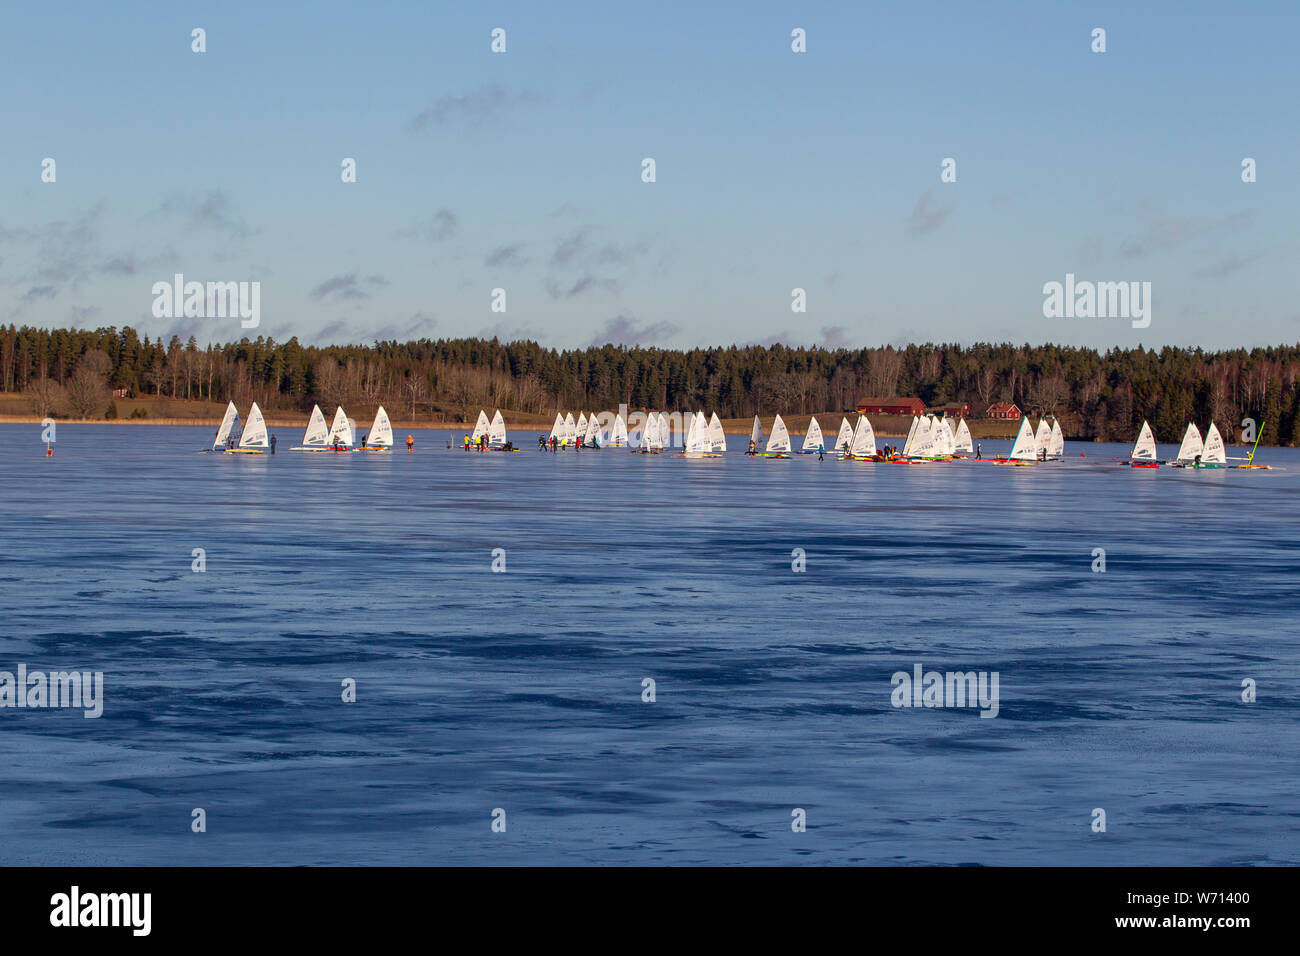 Ice sailing competition on a Swedish lake Stock Photo